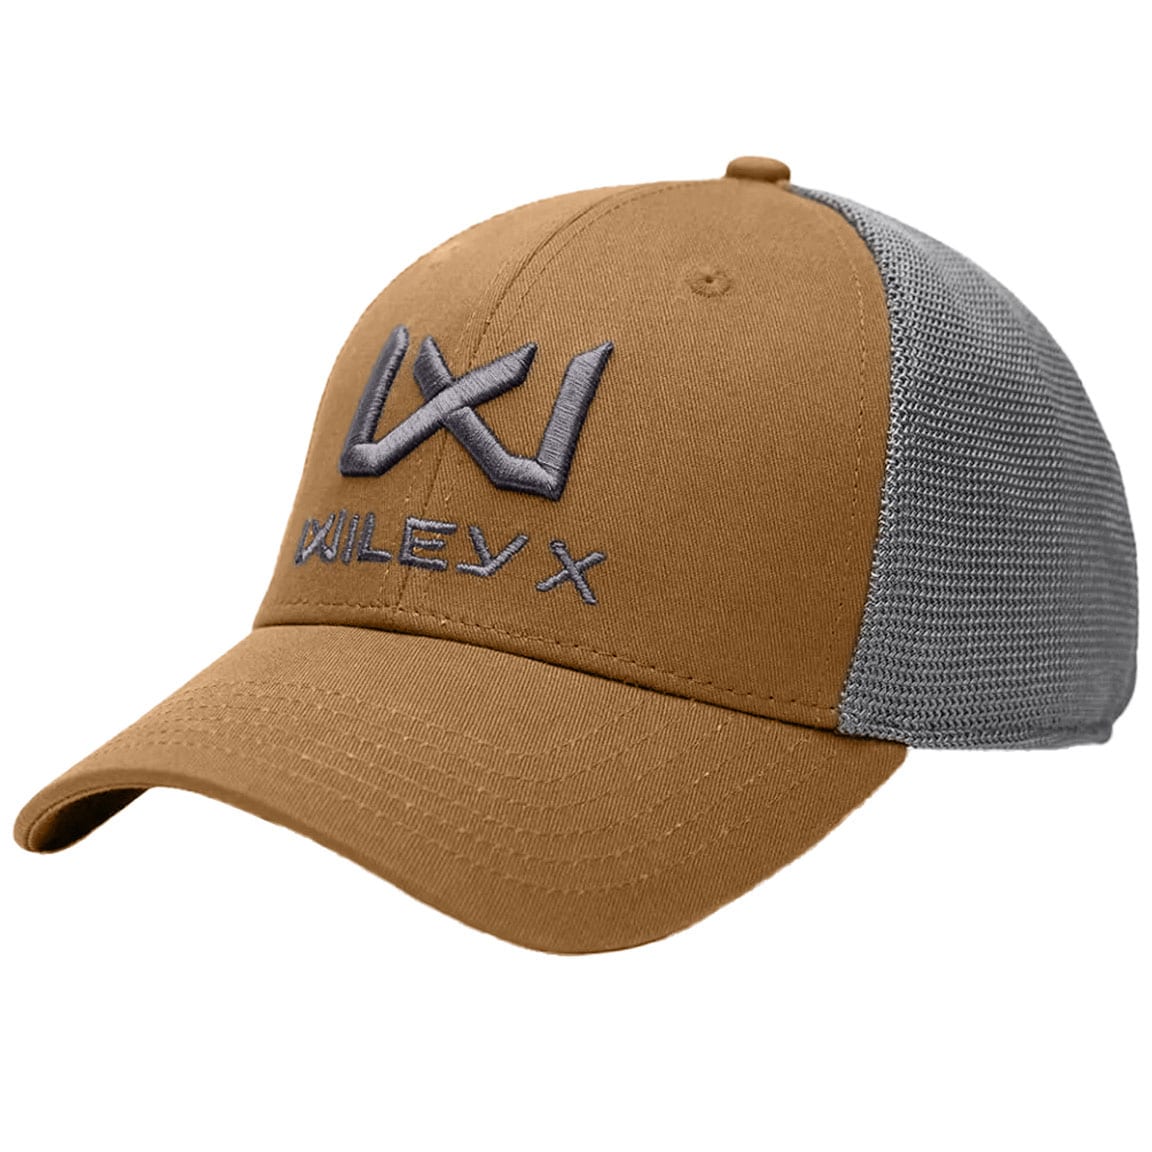 Бейсболка Wiley X Trucker Cap - Tan/Grey WX